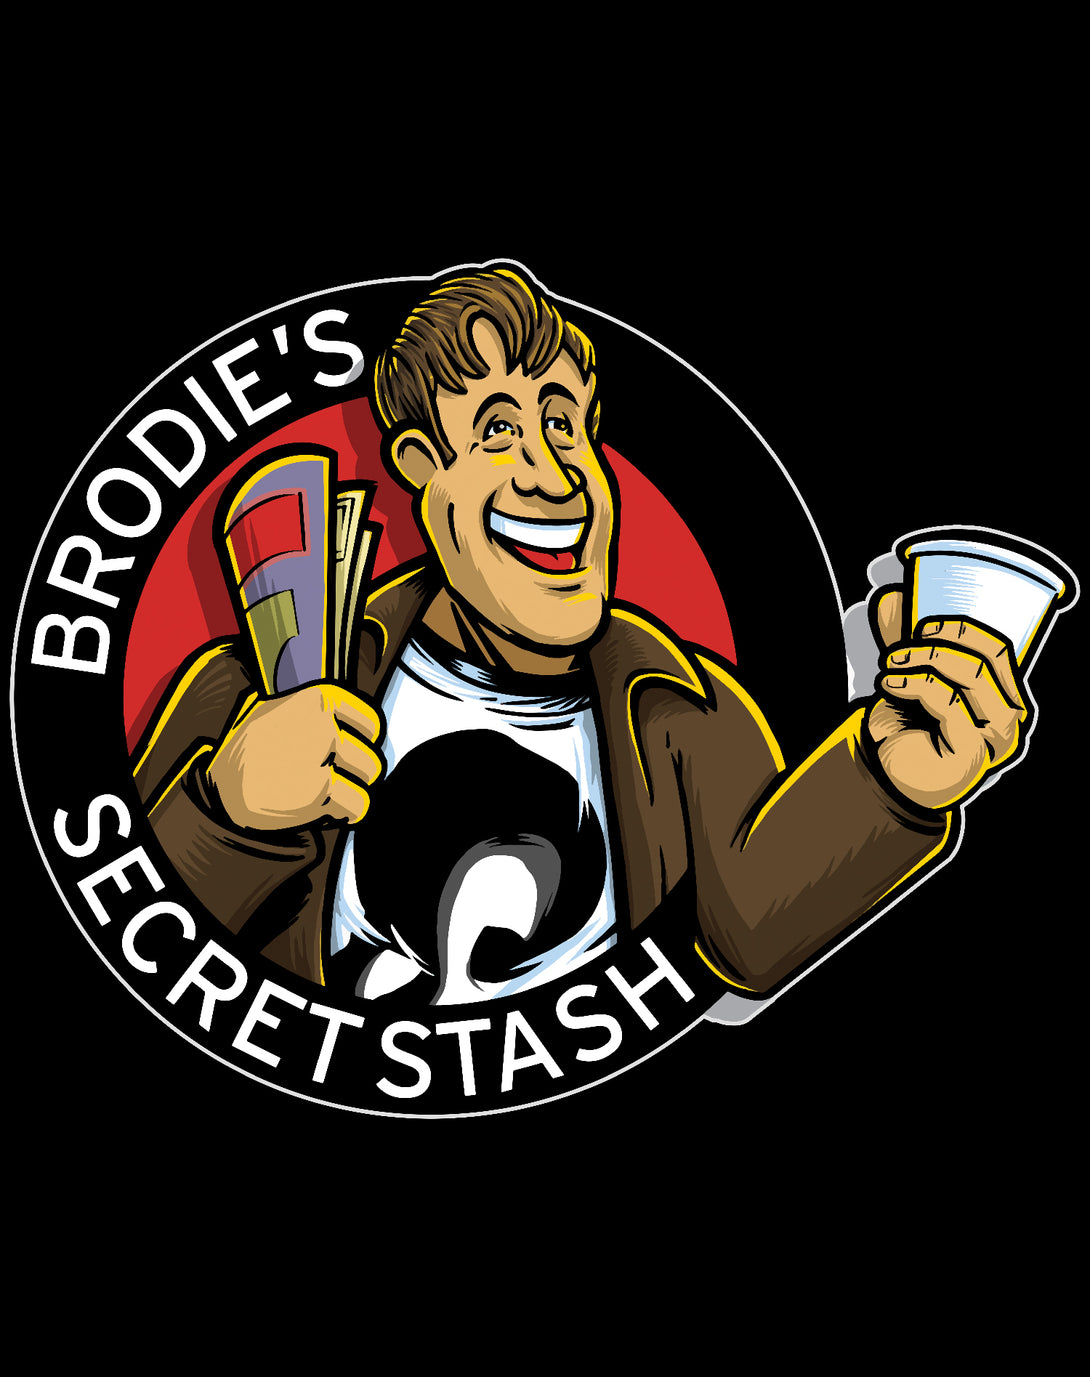 Kevin Smith Jay & Silent Bob Reboot Brodie's Secret Stash Comic Book Store Logo Official Women's T-Shirt Black - Urban Species Design Close Up